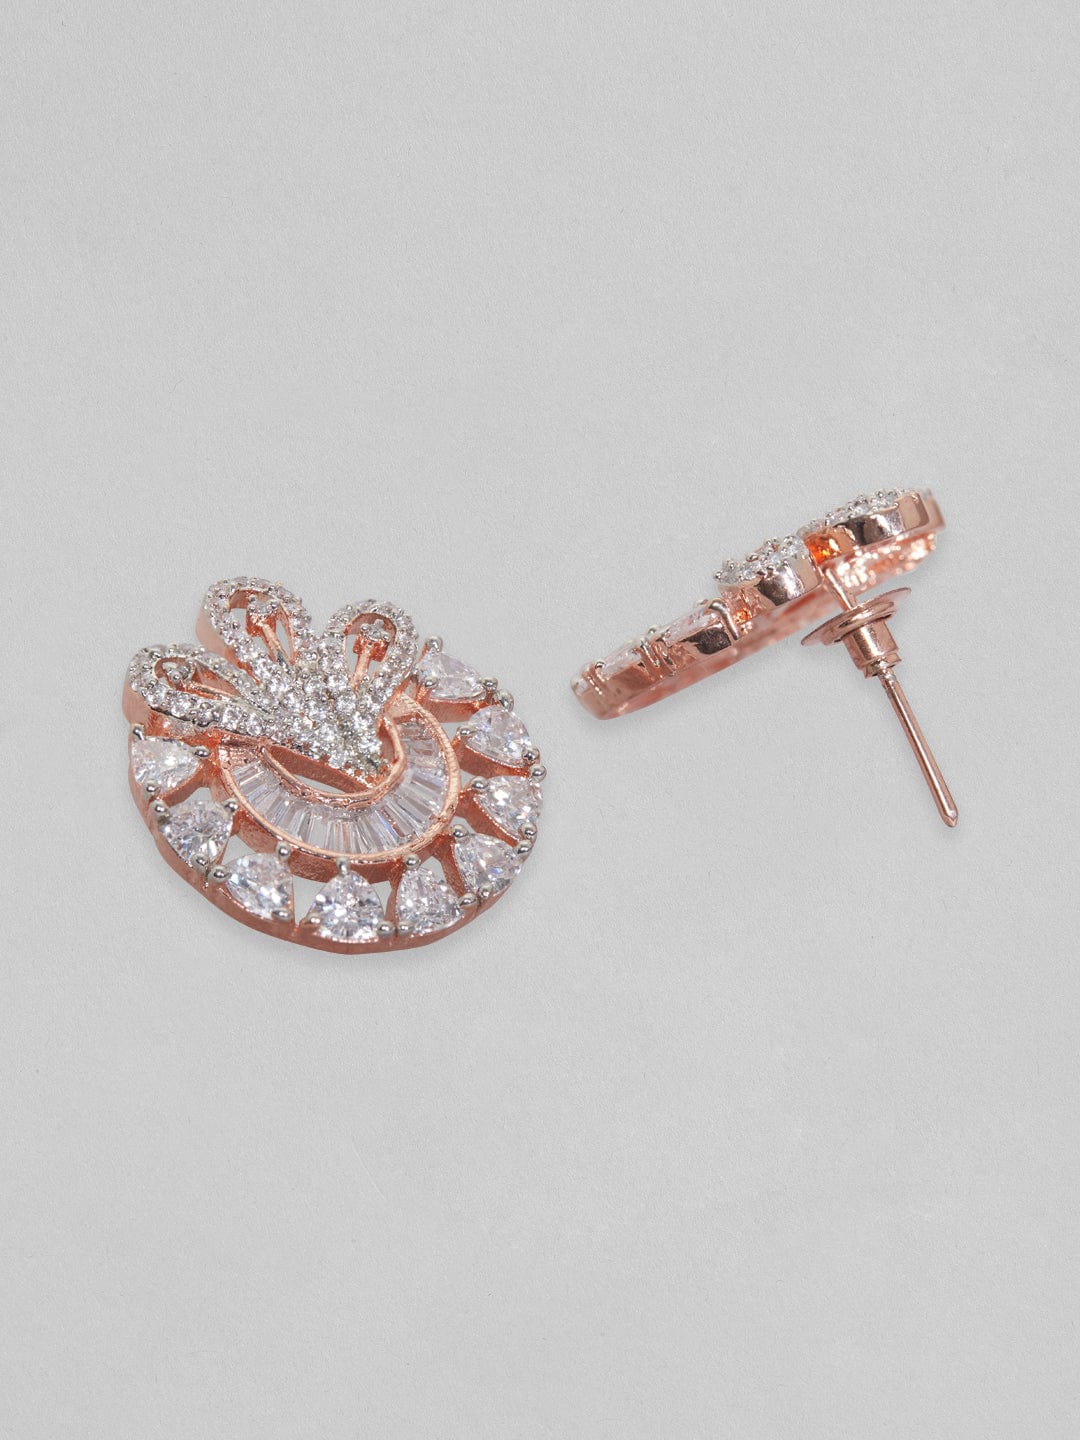 Rubans Rose Gold Plated Drop Earrings With American Diamonds Earrings